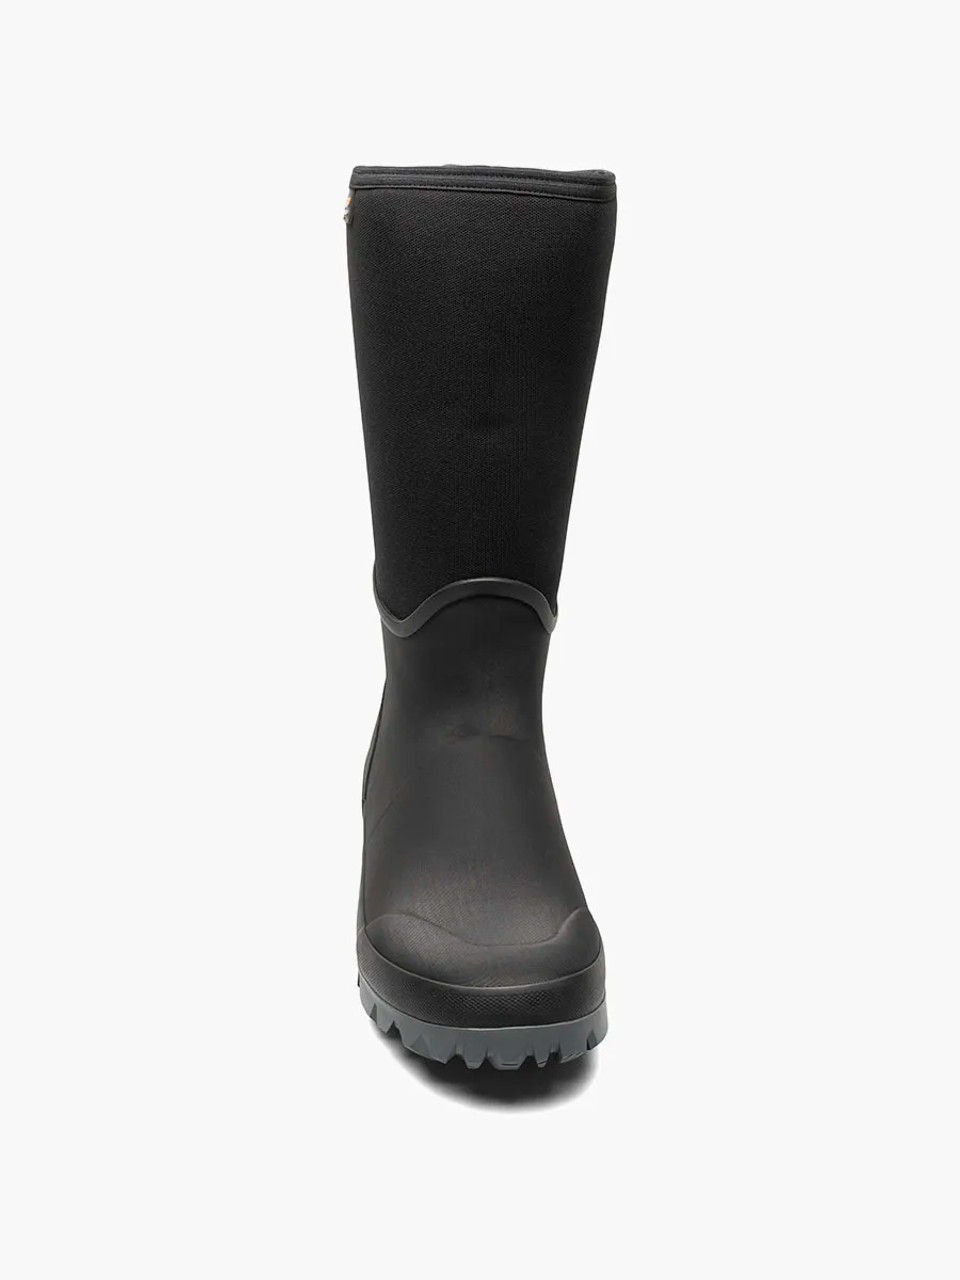 Bogs Arcata Tall Men's Waterproof Insulated Boots